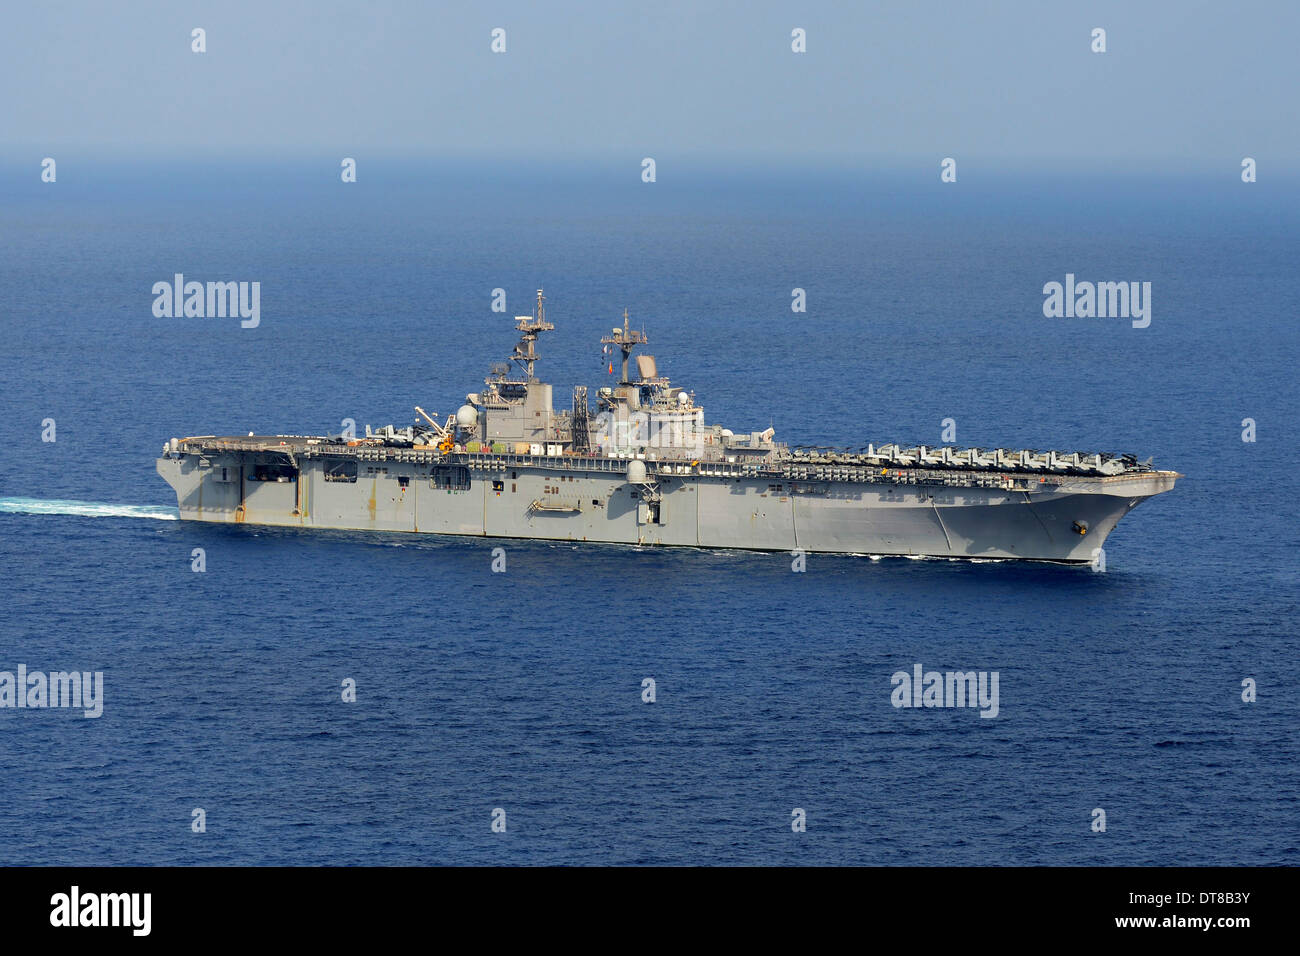 Gulf of Oman, May 2, 2013 - The amphibious assault ship USS Kearsarge (LHD-3) conducts operations at sea. Stock Photo